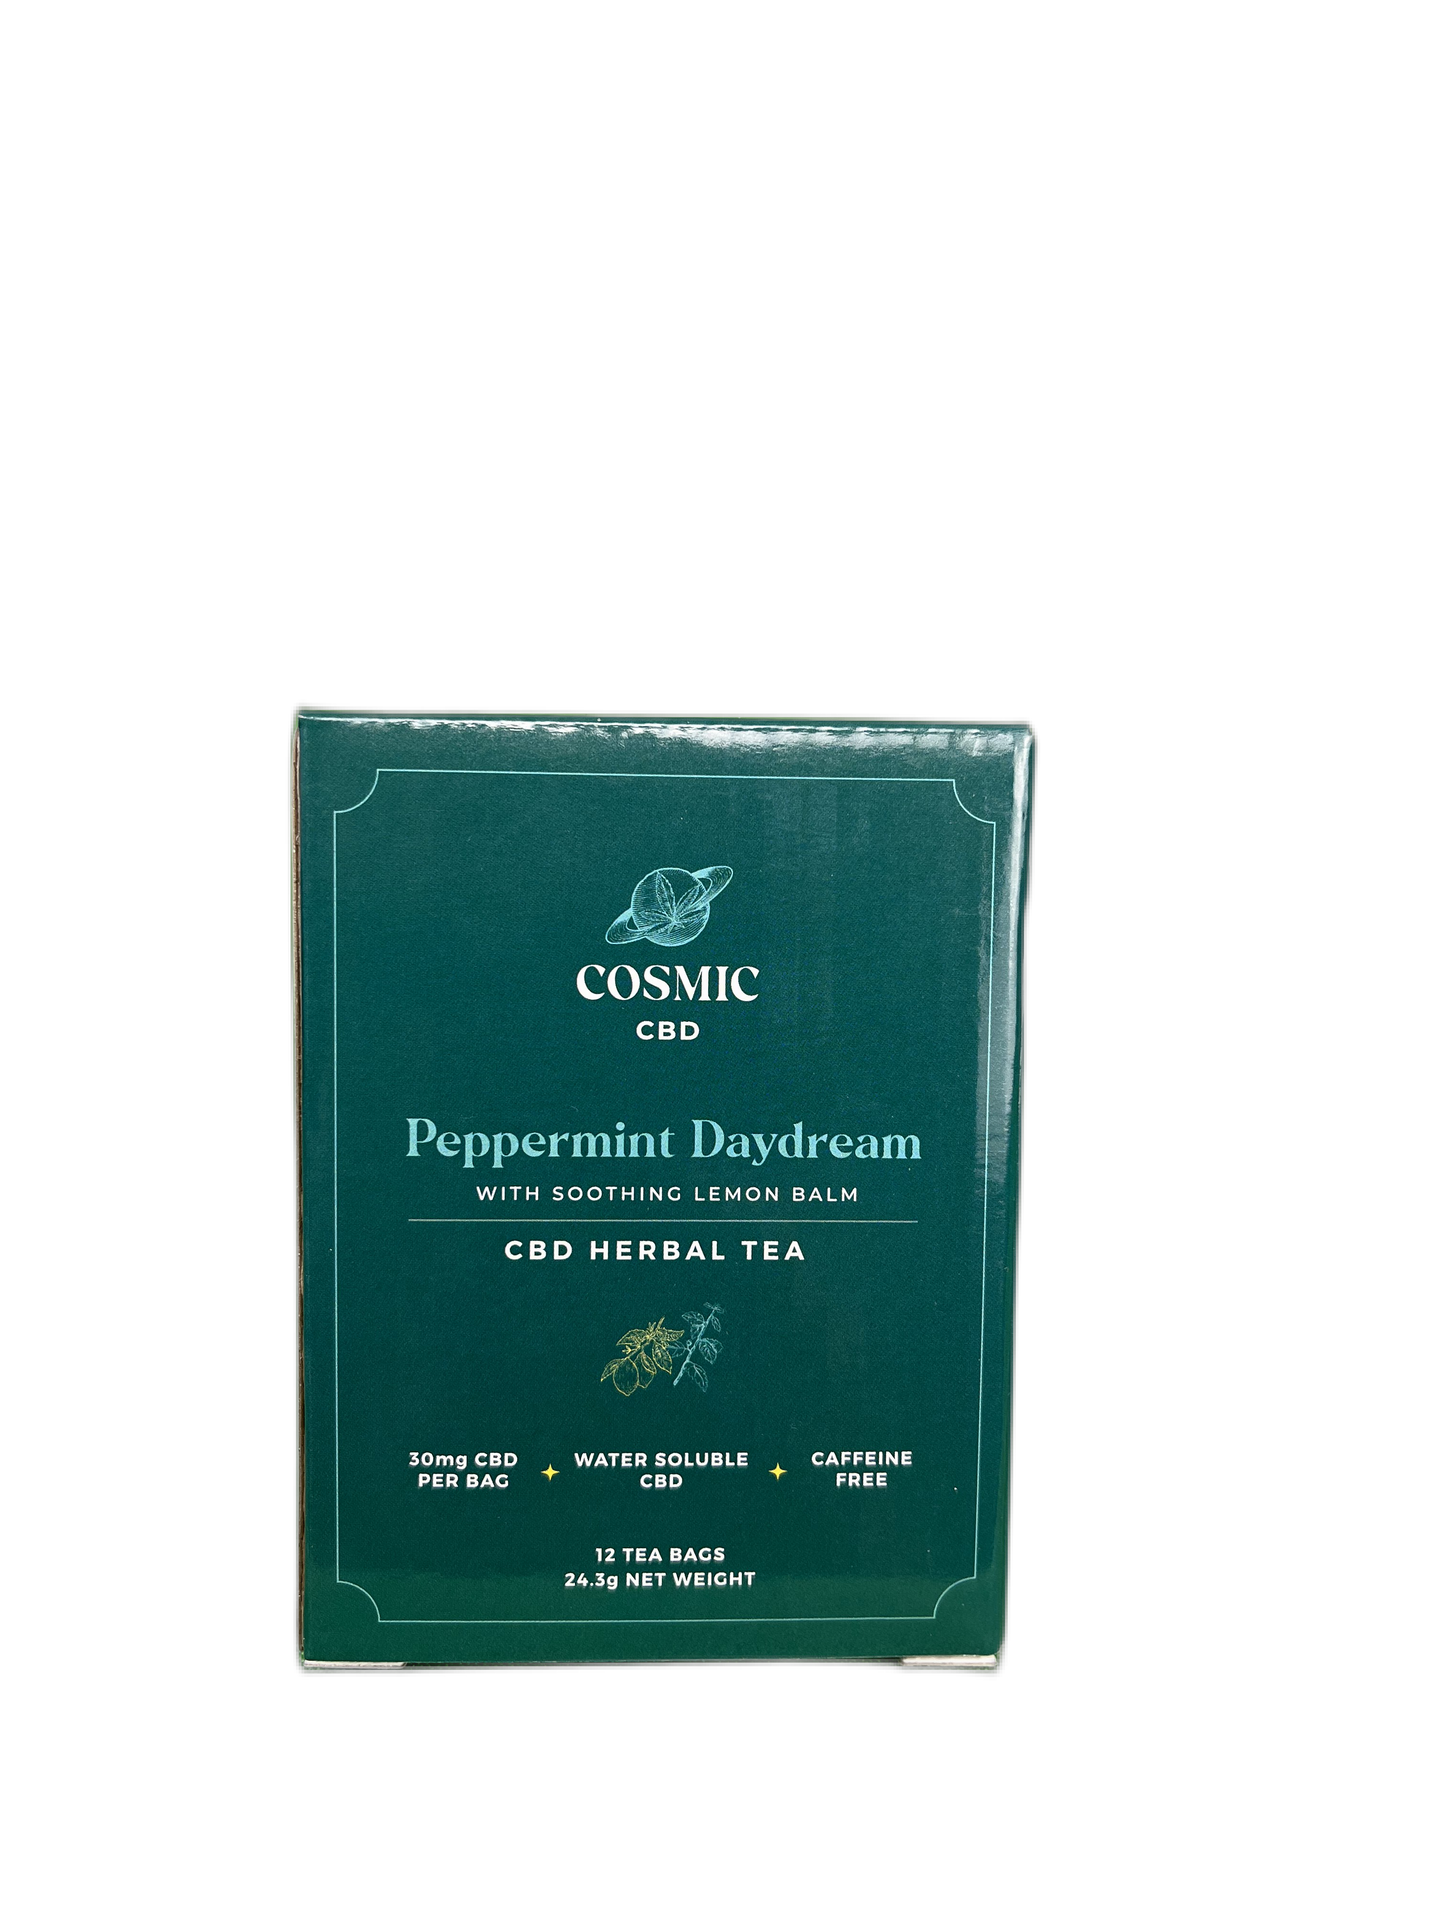 Peppermint Daydream